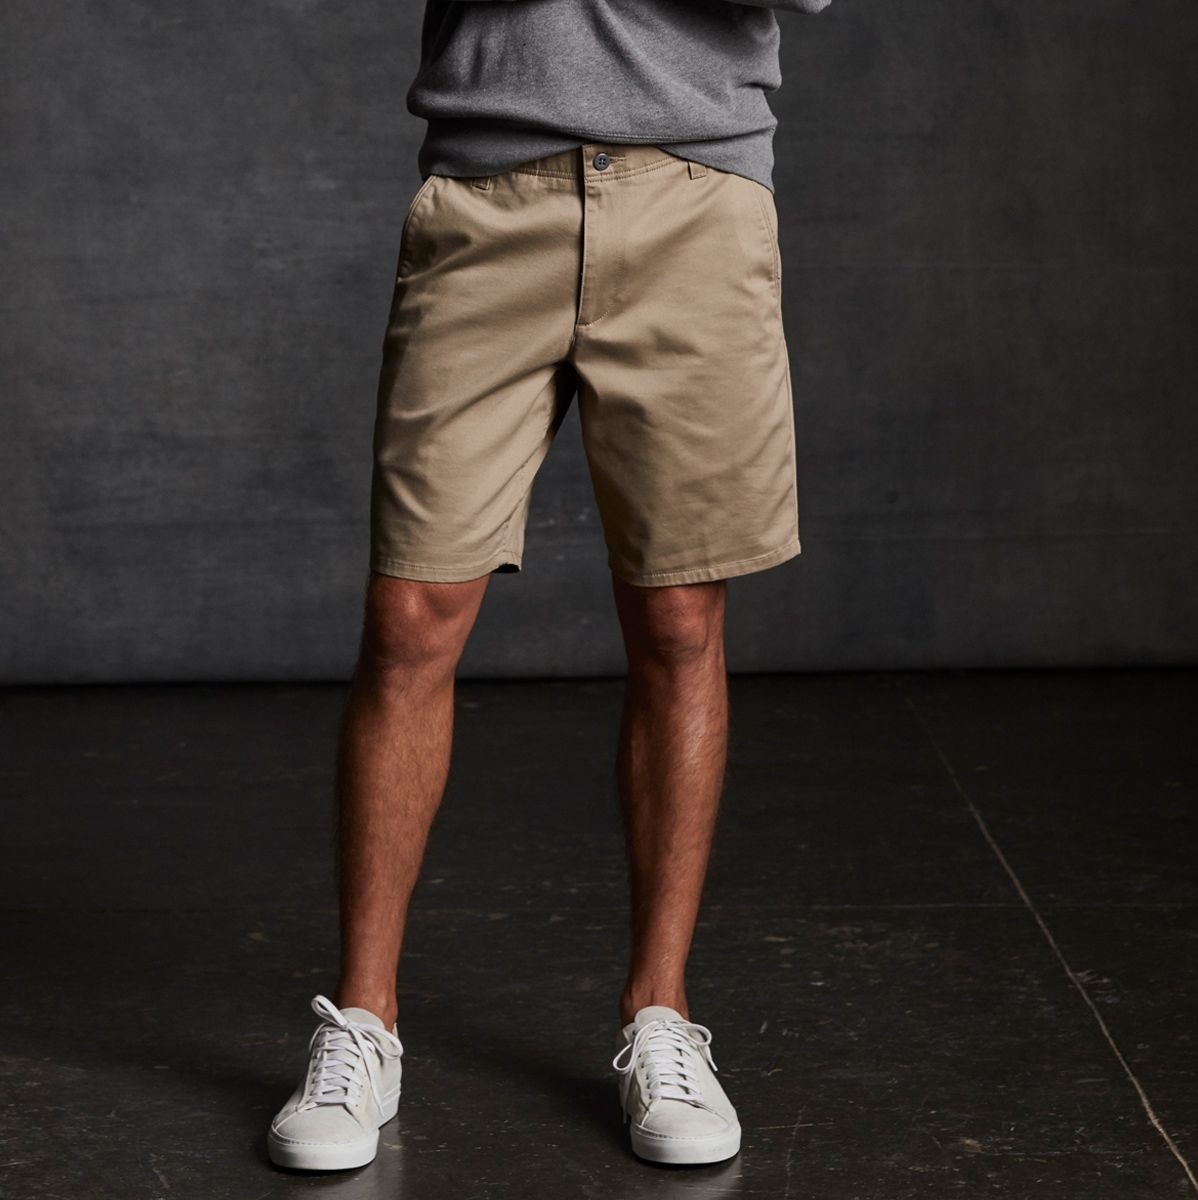 Dockers - Men's Dockers Pants, Khakis & Clothing - Macy's